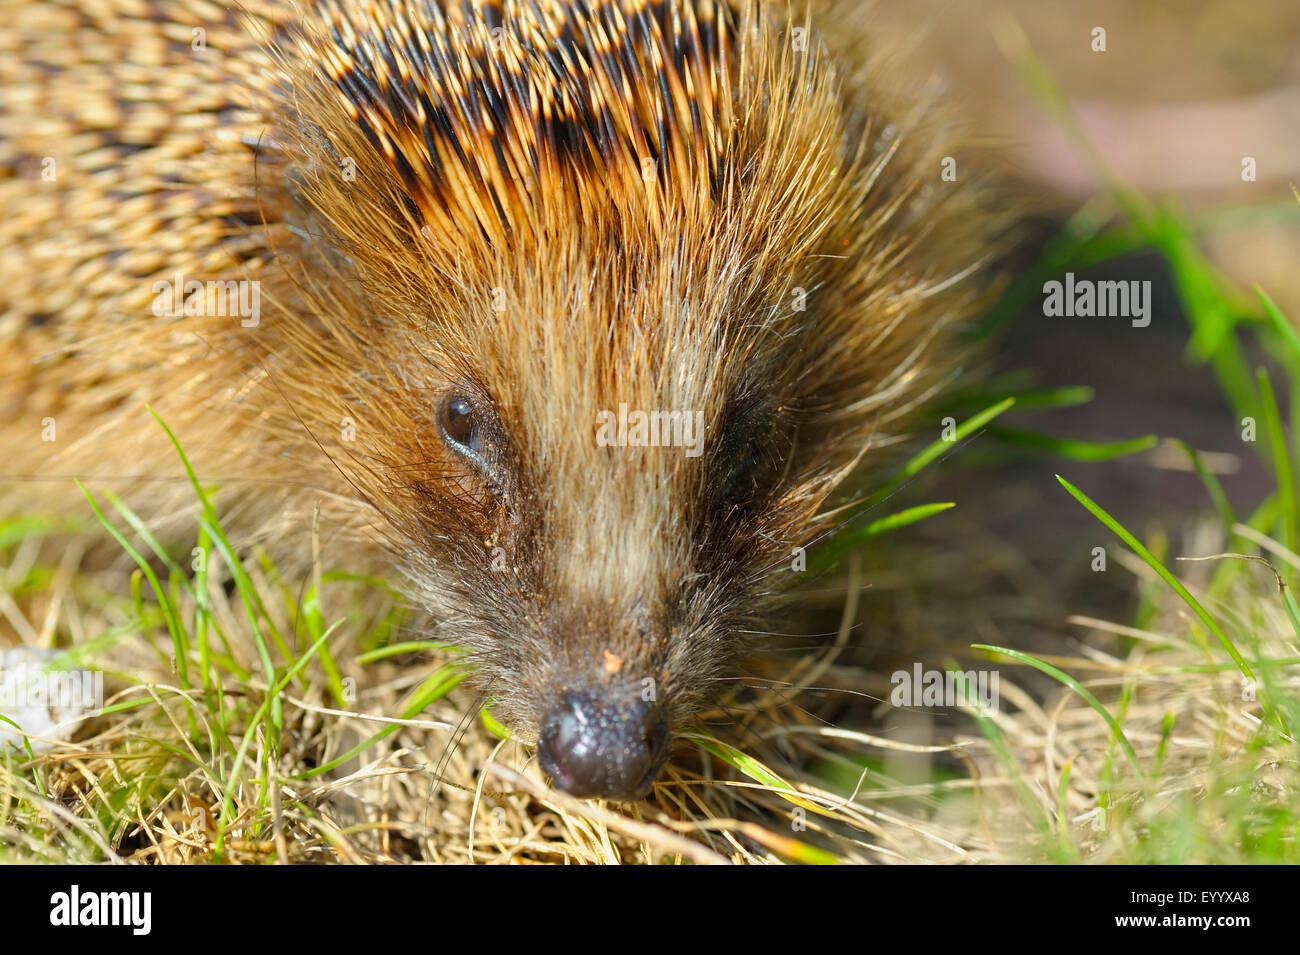 Western hedgehog, European hedgehog (Erinaceus europaeus), portrait, Germany, North Rhine-Westphalia Stock Photo